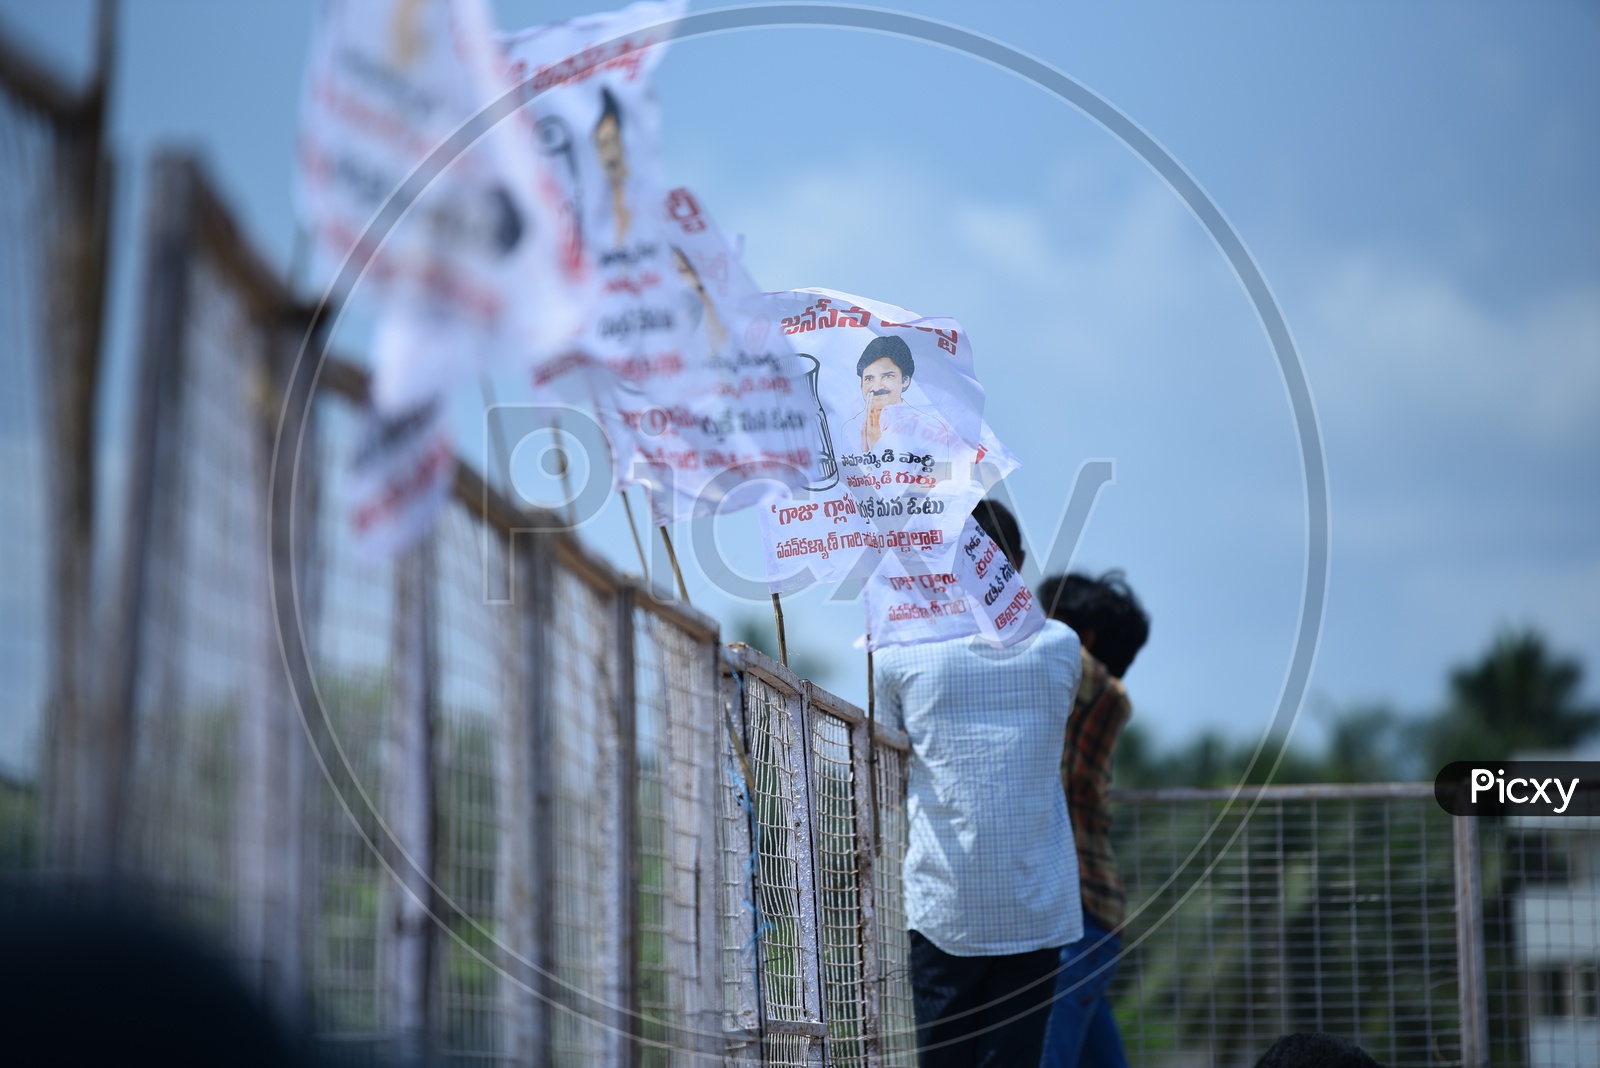 Jana Sena party "Glass tumbler" symbol on flags